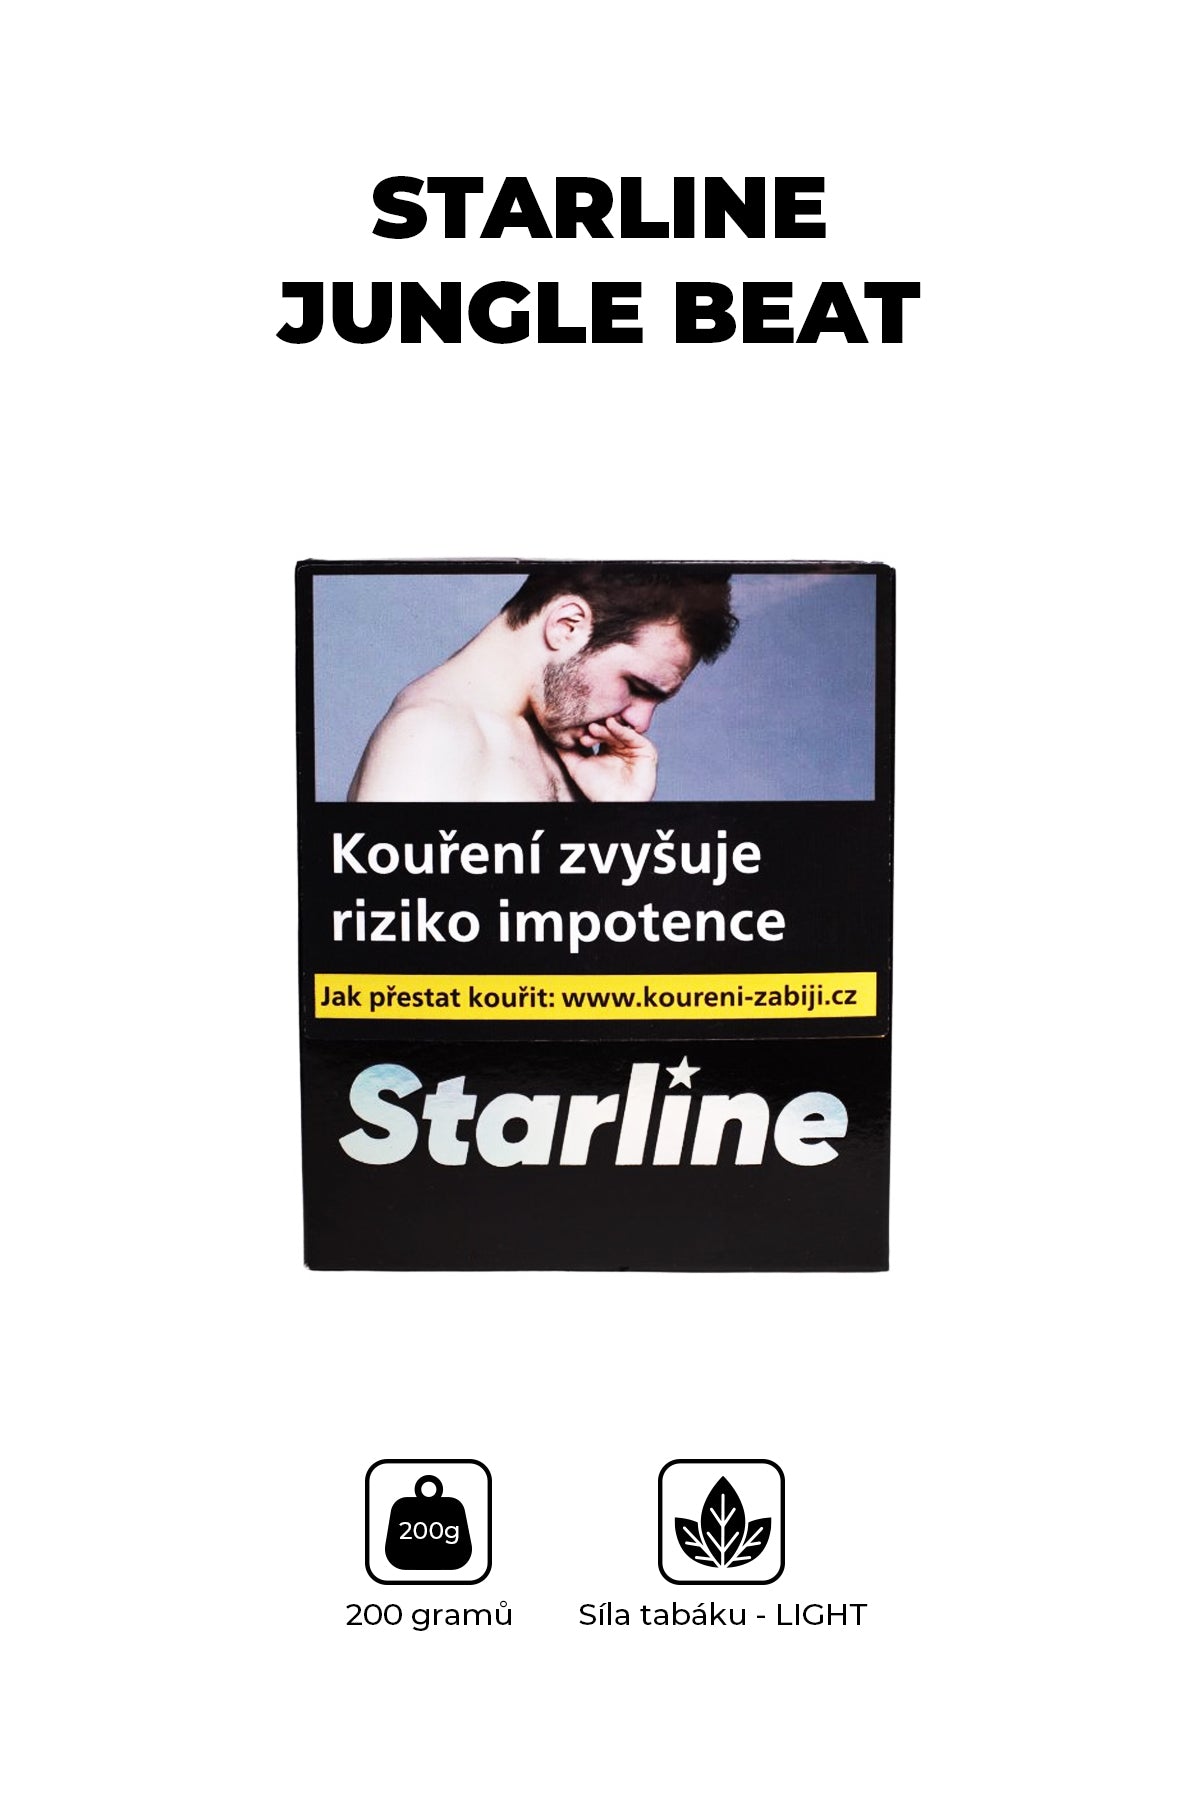 Tabák - Starline 200g - Jungle Beat